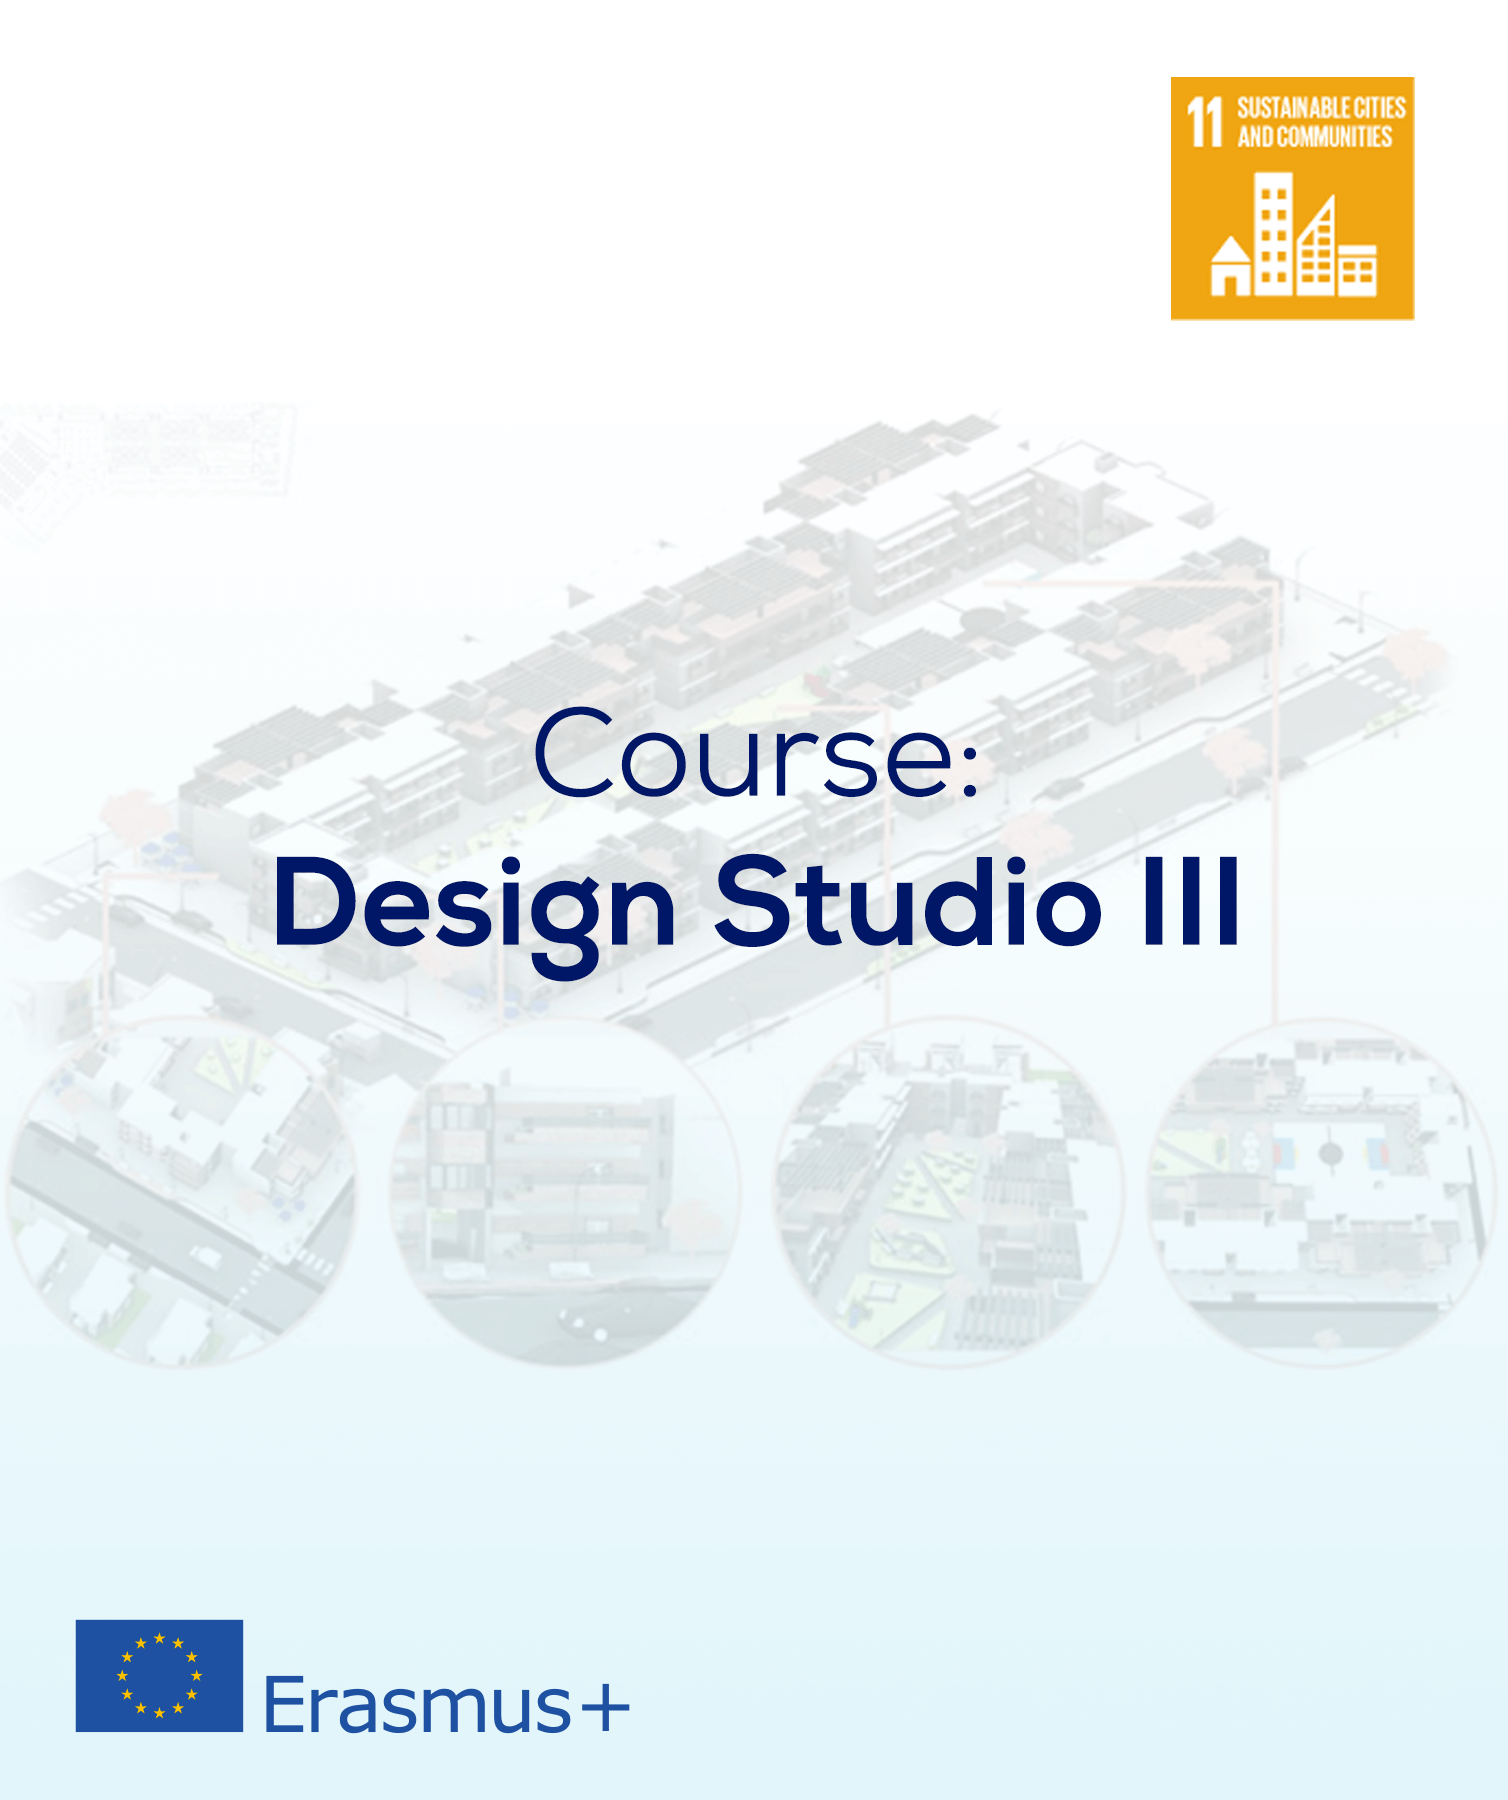 Course: Design Studio III